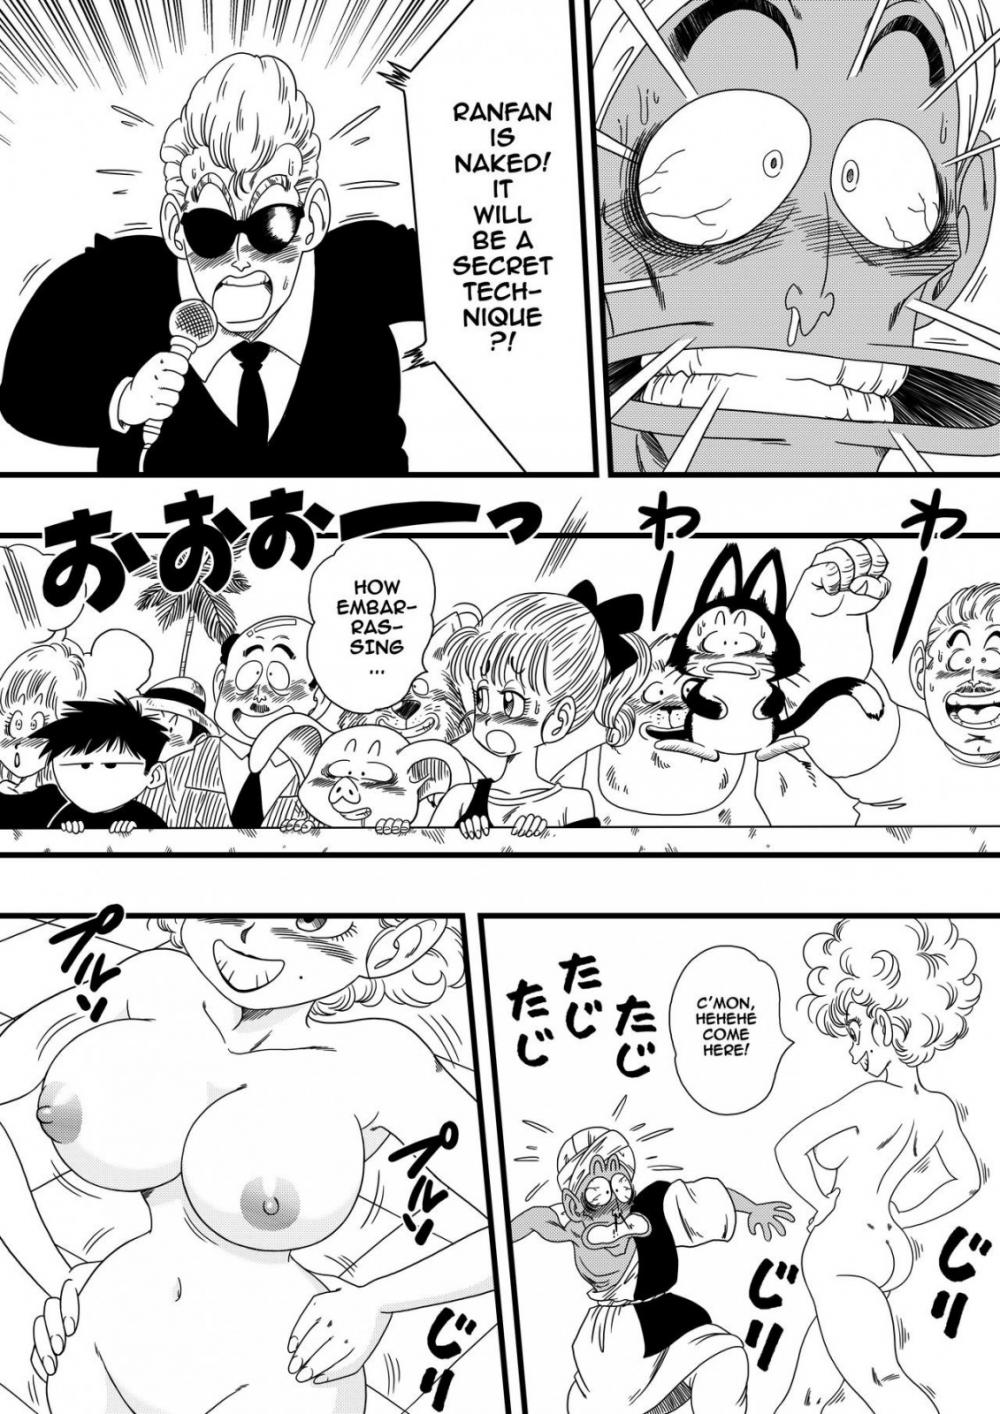 Hentai Manga Comic-NAM VS RANFAN-Read-5